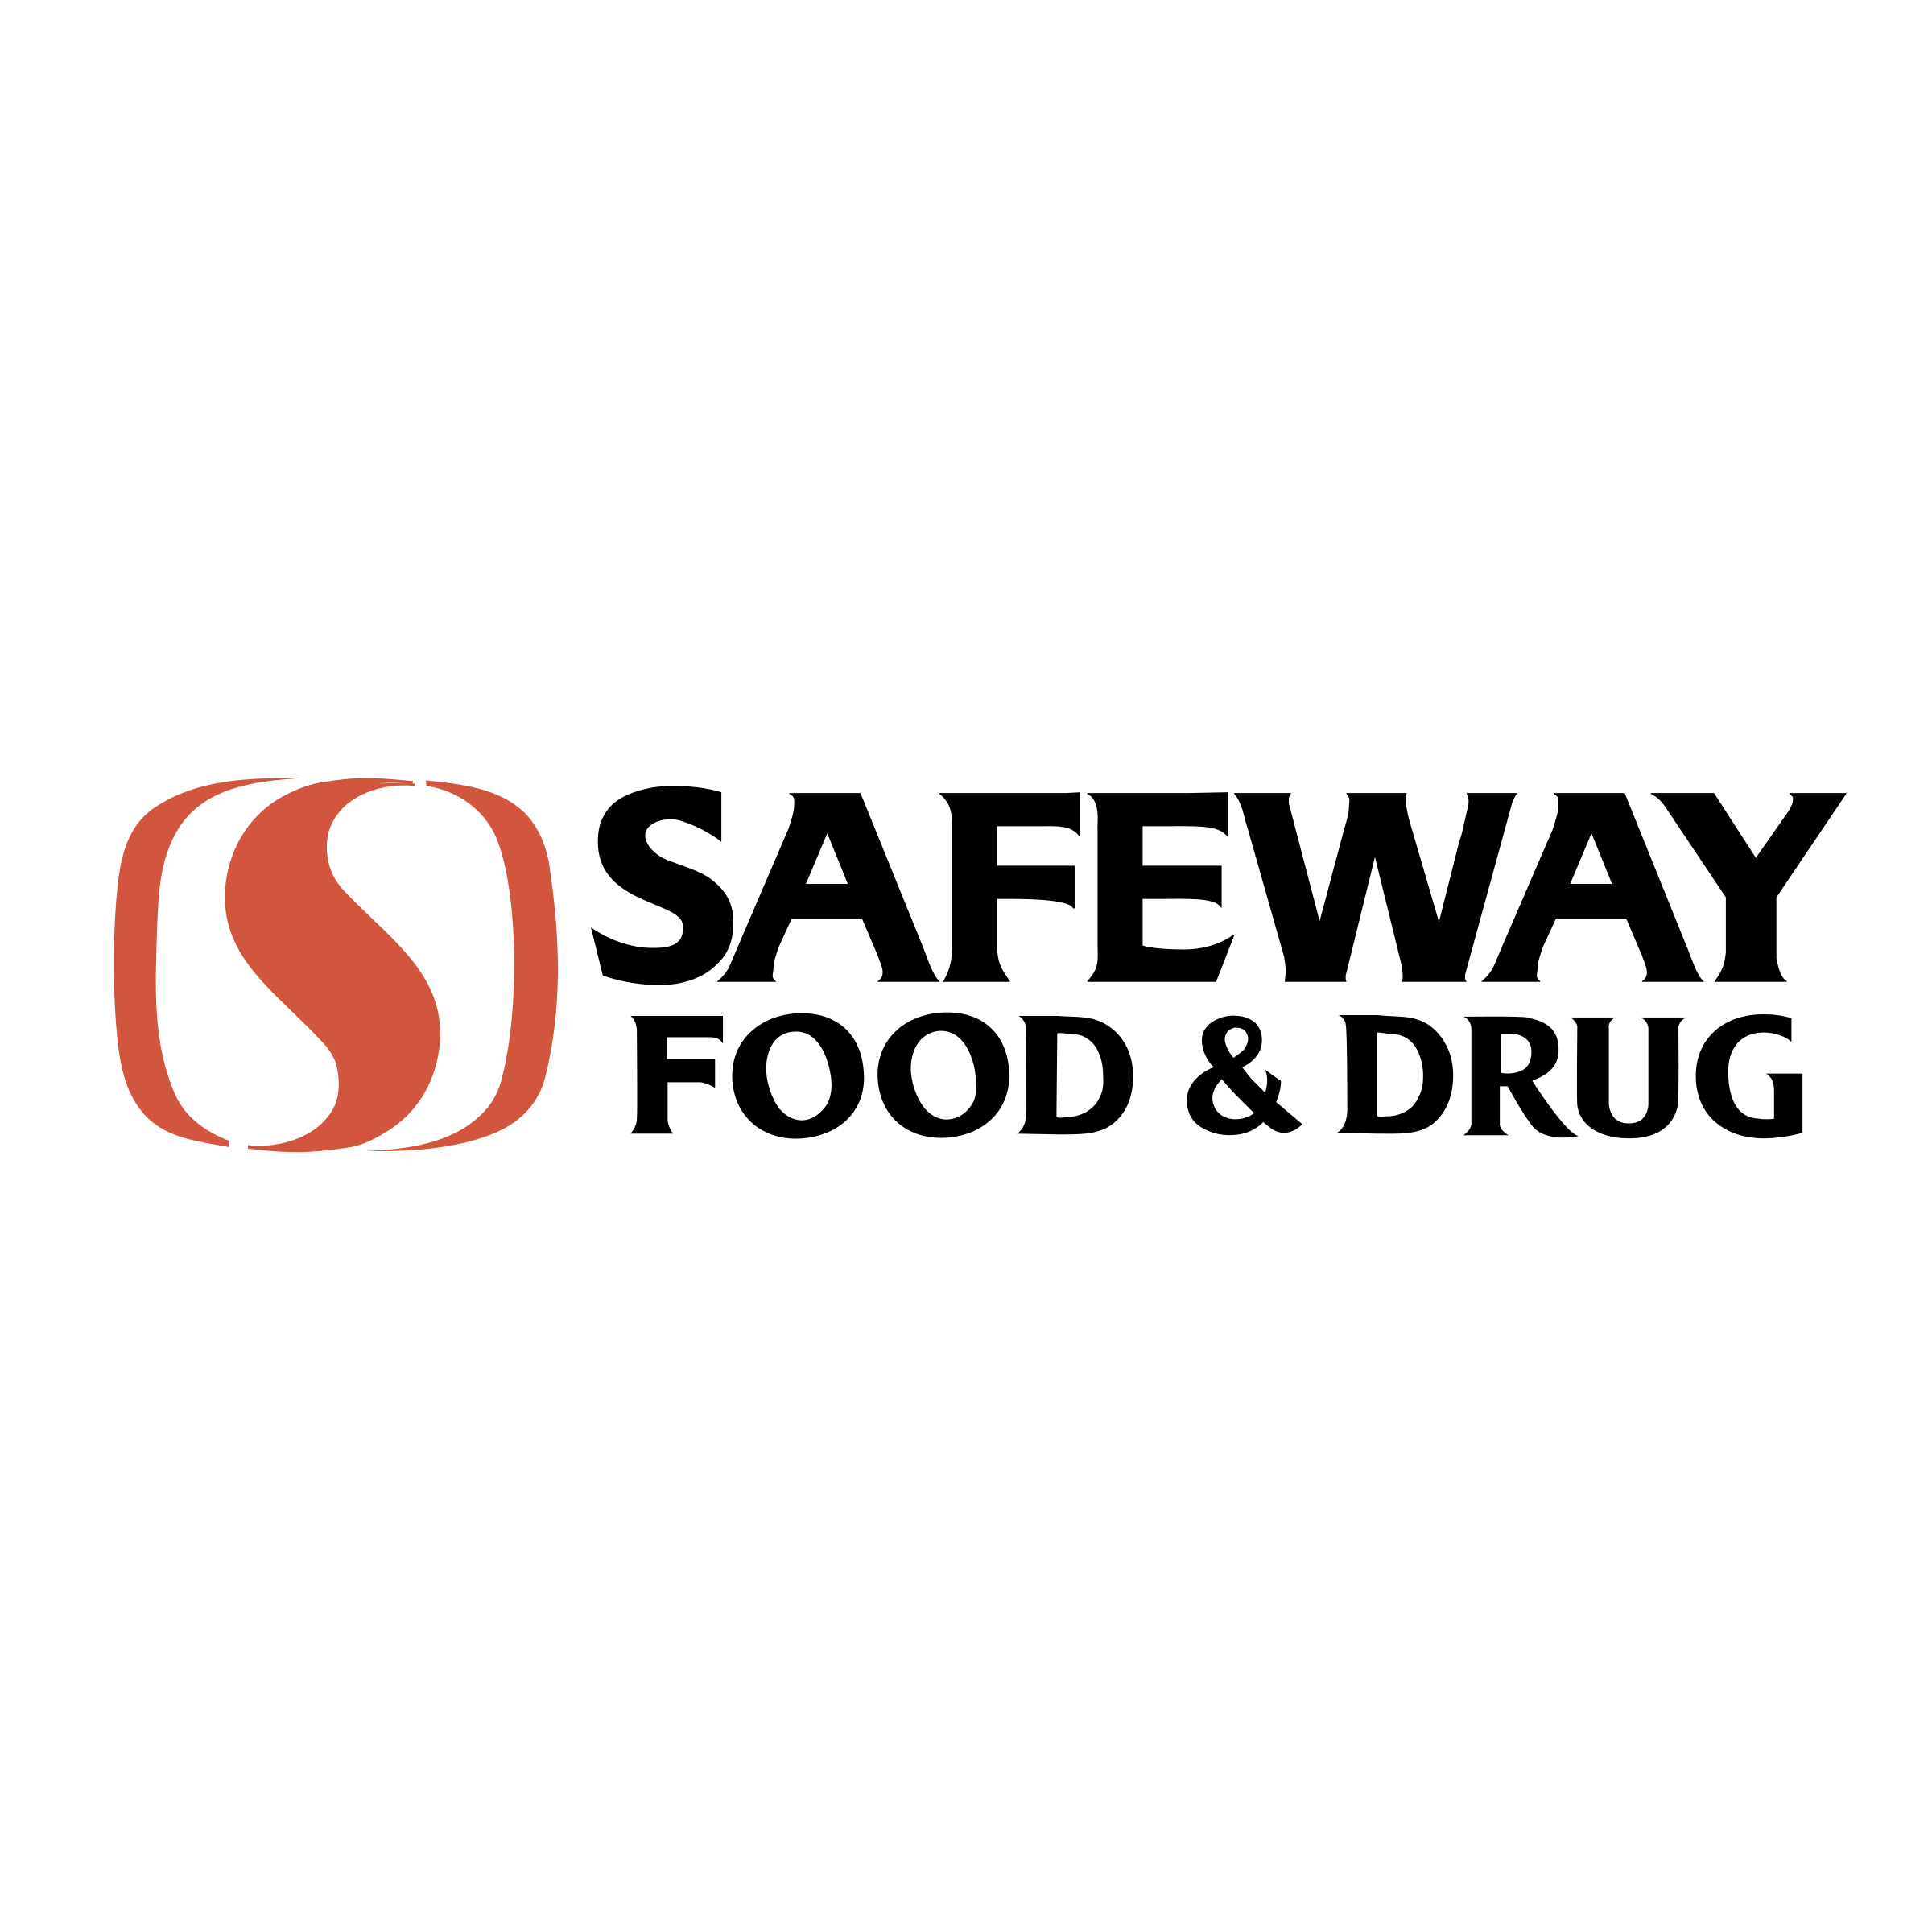 Safeway Logo - Safeway Logo PNG Transparent & SVG Vector - Freebie Supply